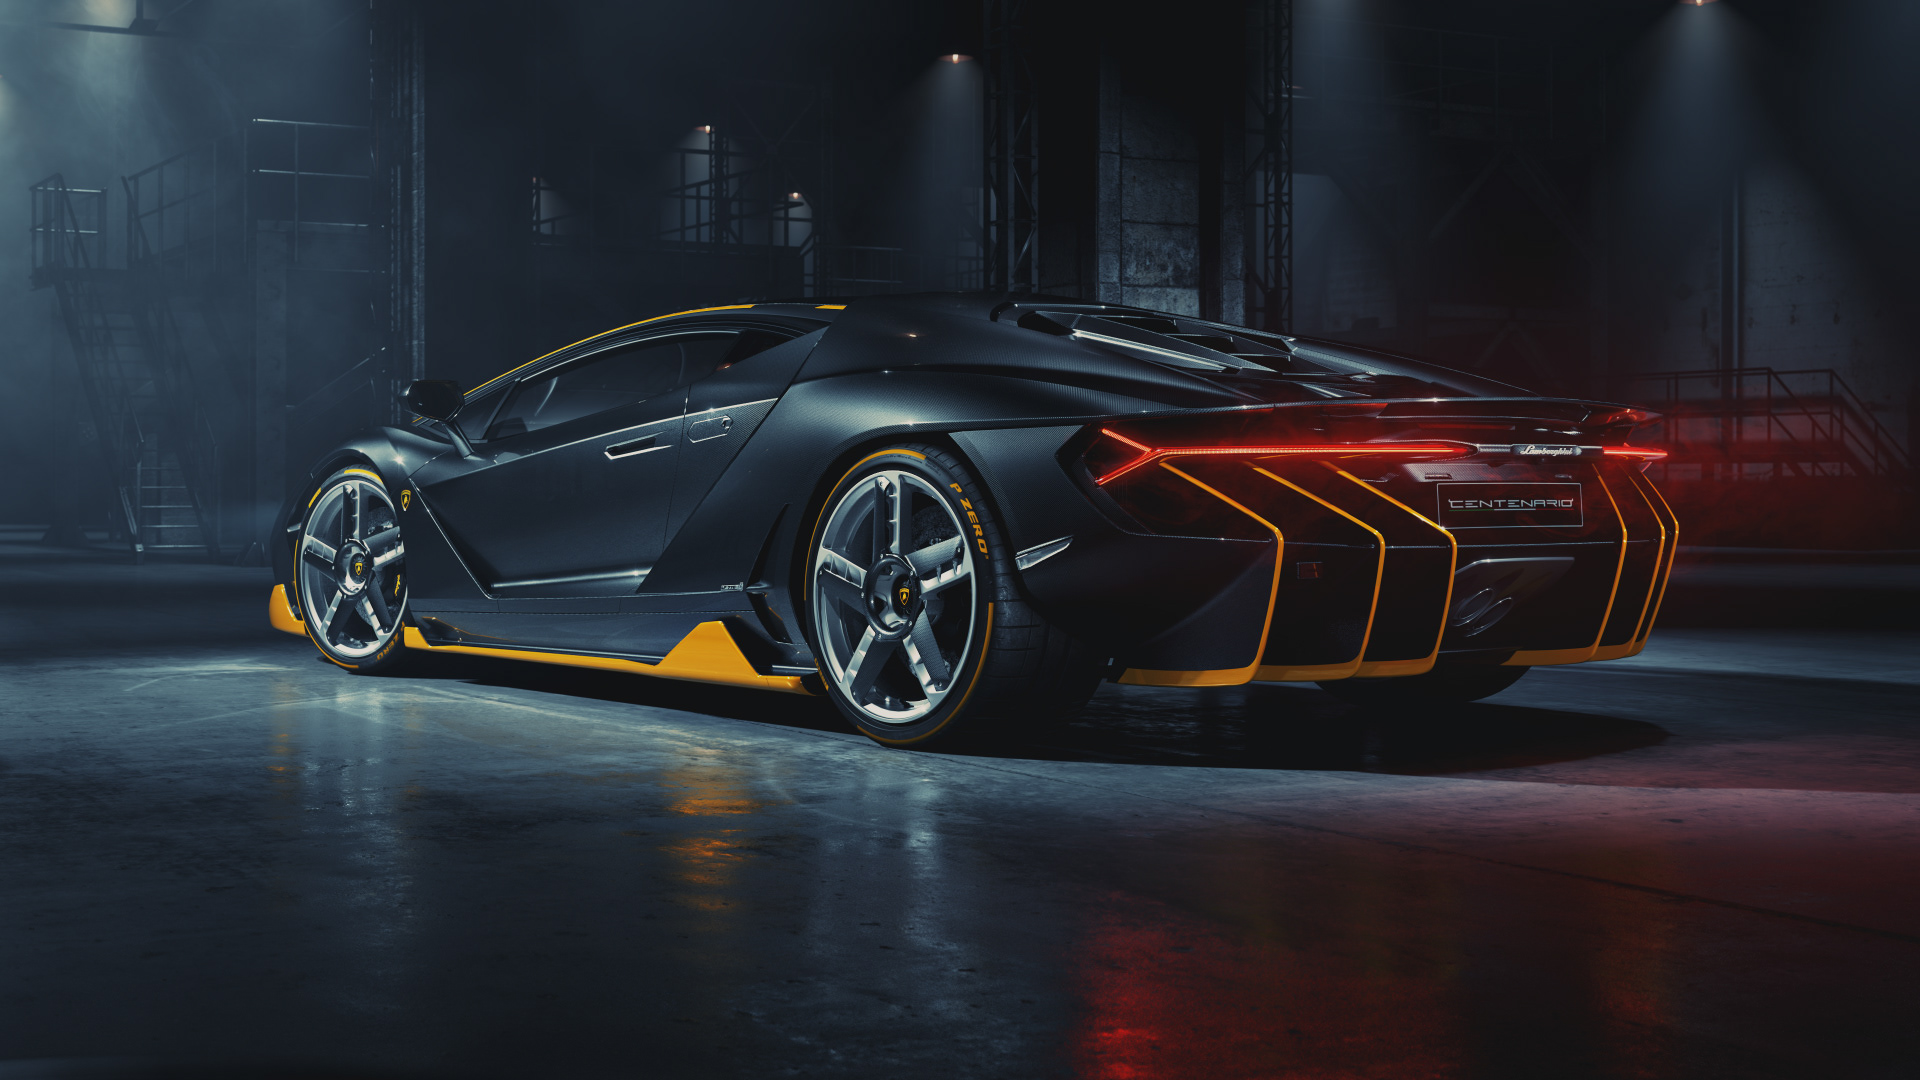 Lamborghini Centenario \u2013 Full CGI on Behancebfa4cc91477621.5e32d3fdbb963.jpg